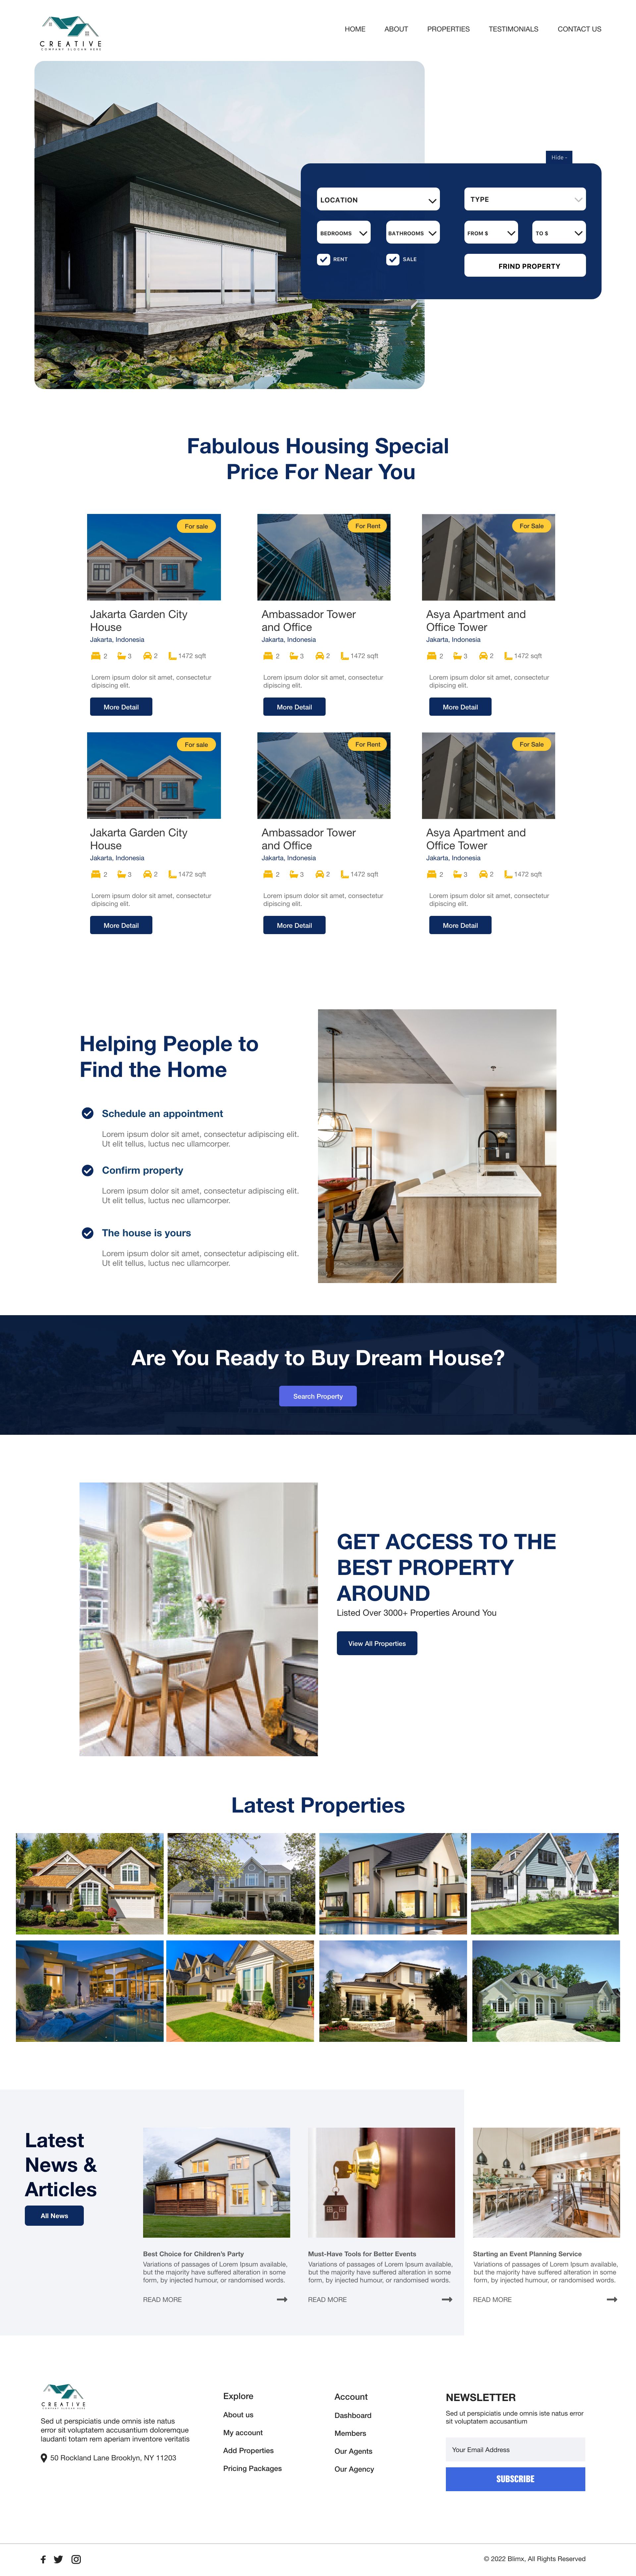 Fabulous Home Website Design